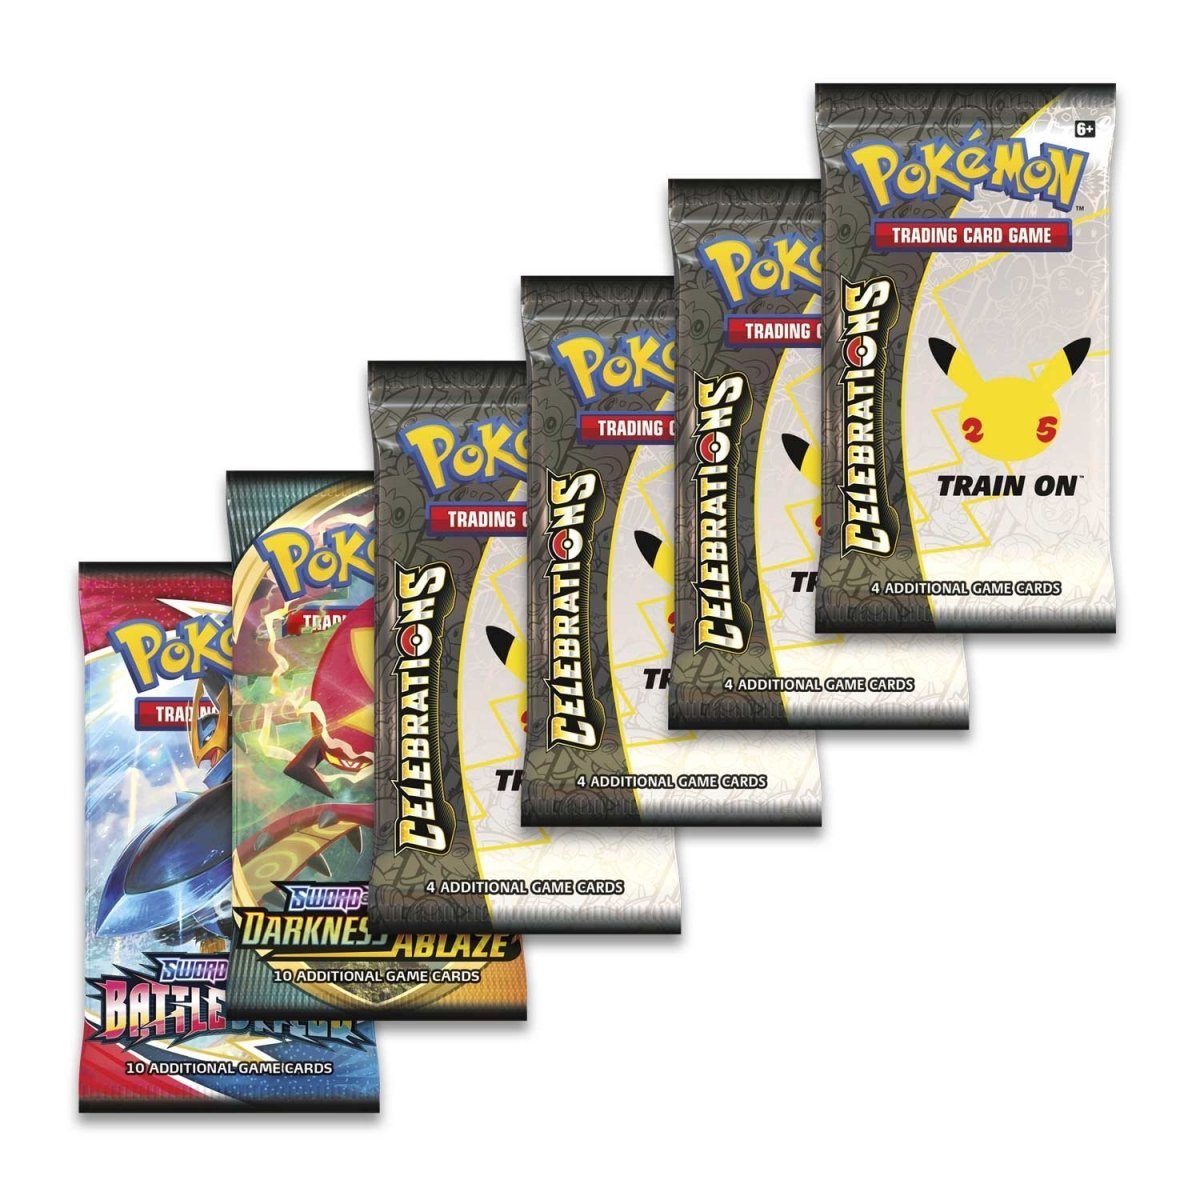 Pokémon TCG: Celebrations Collection Lance's Charizard V - PokeRvmCollection Box